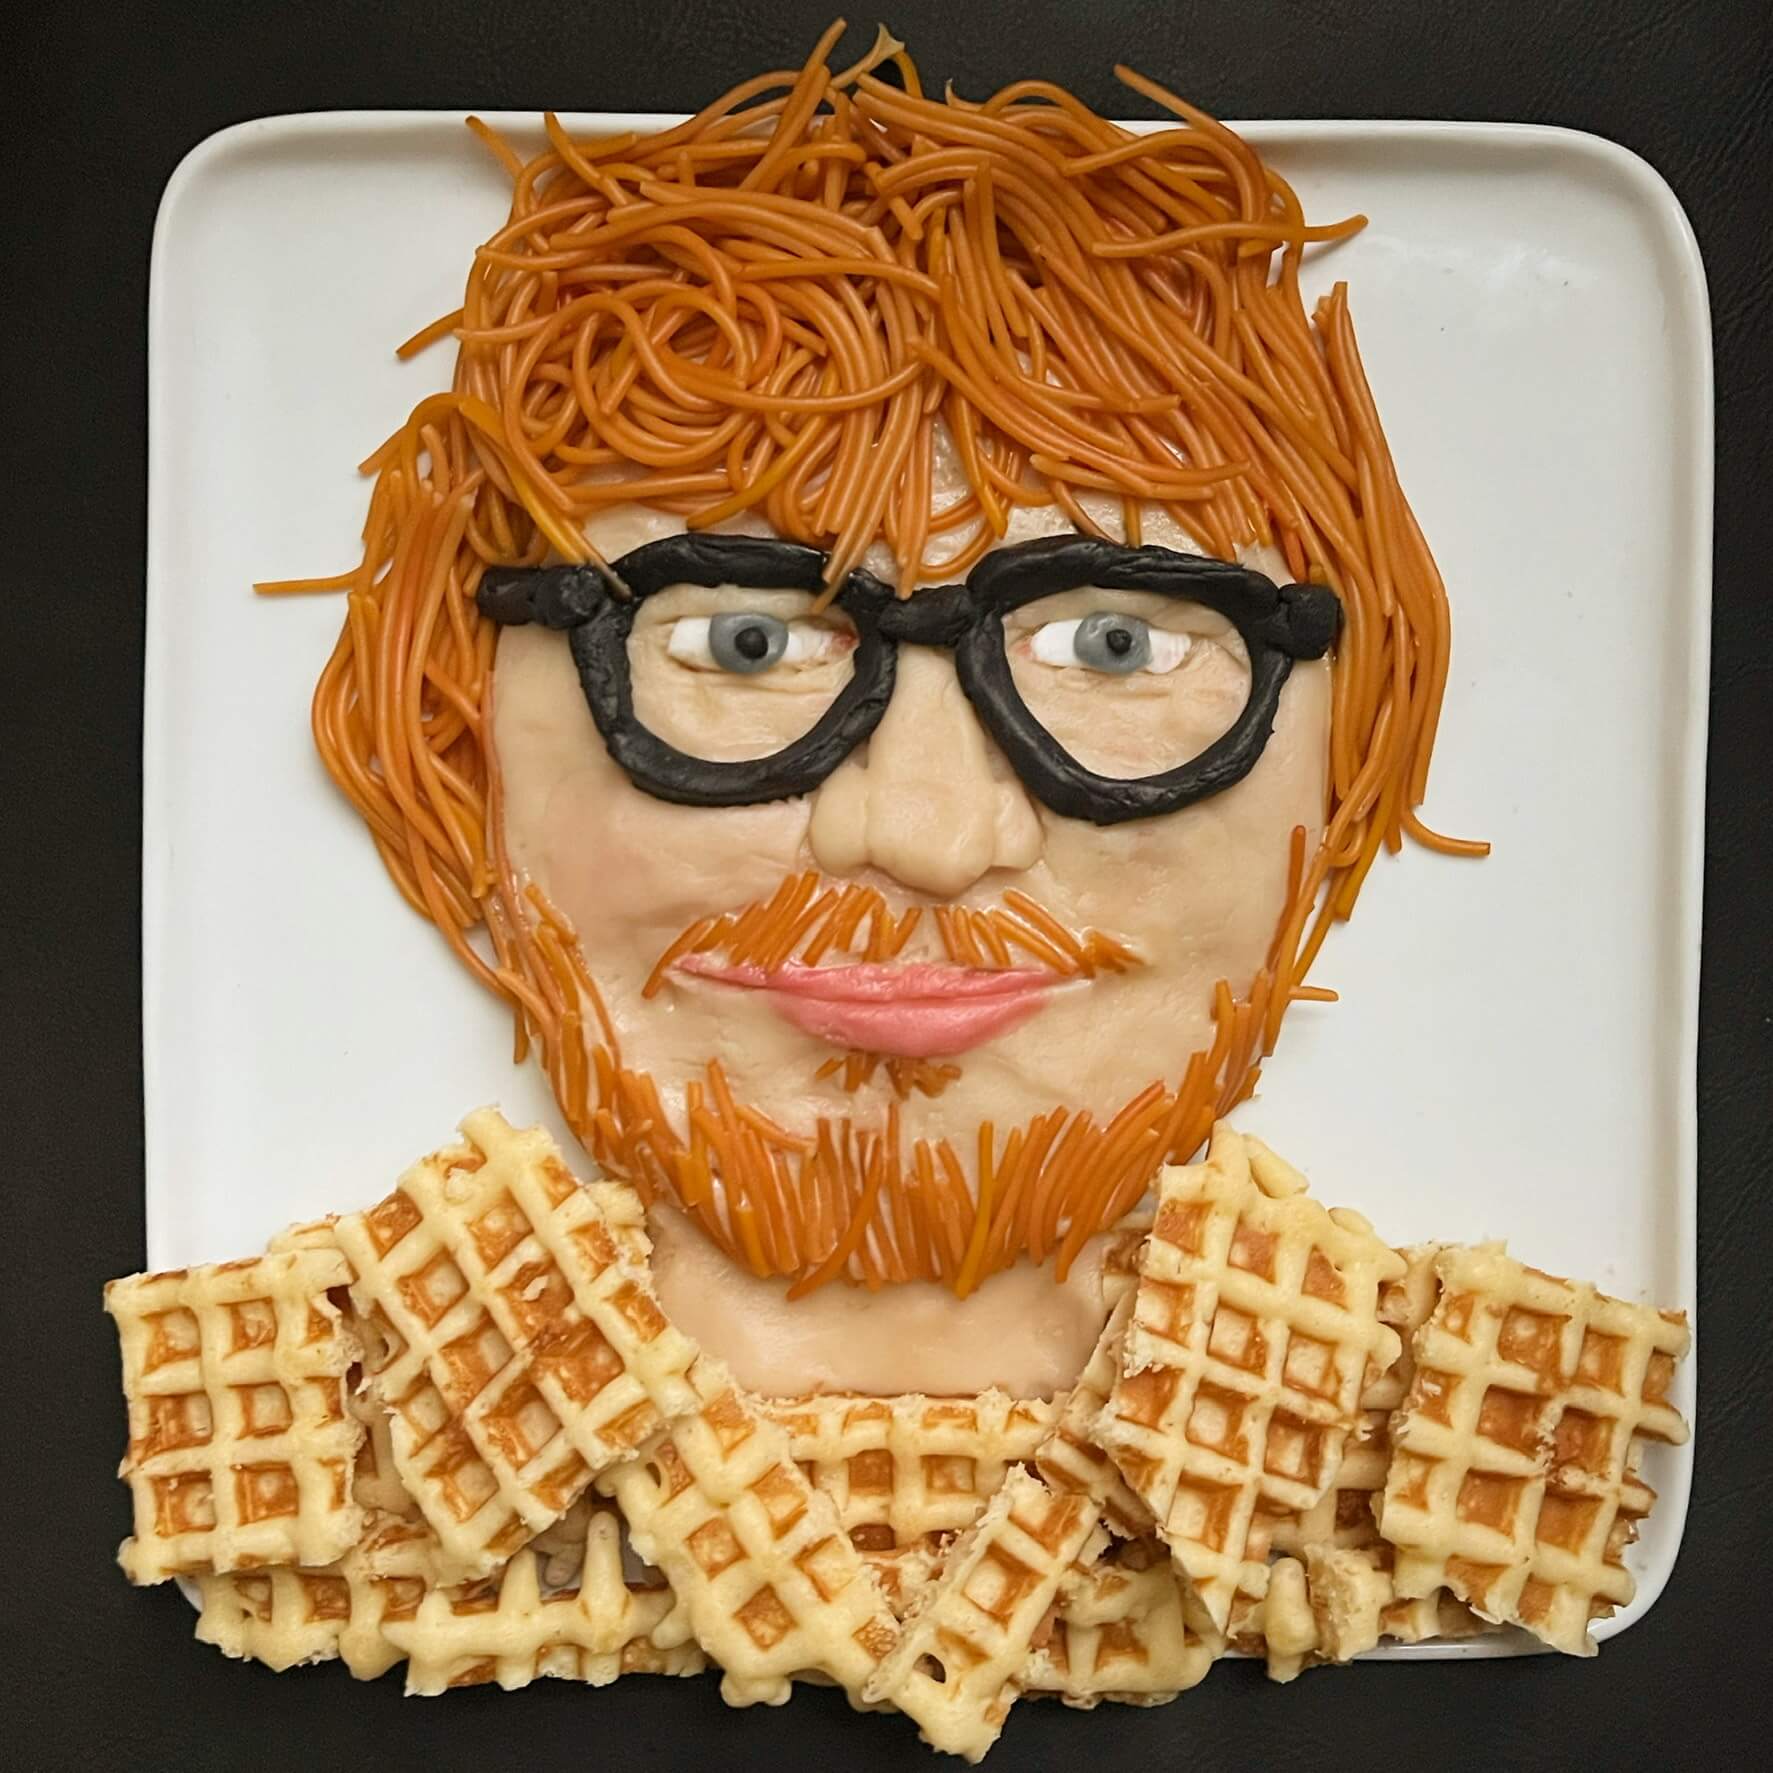 Ed Sheeran food art by Harley Langberg